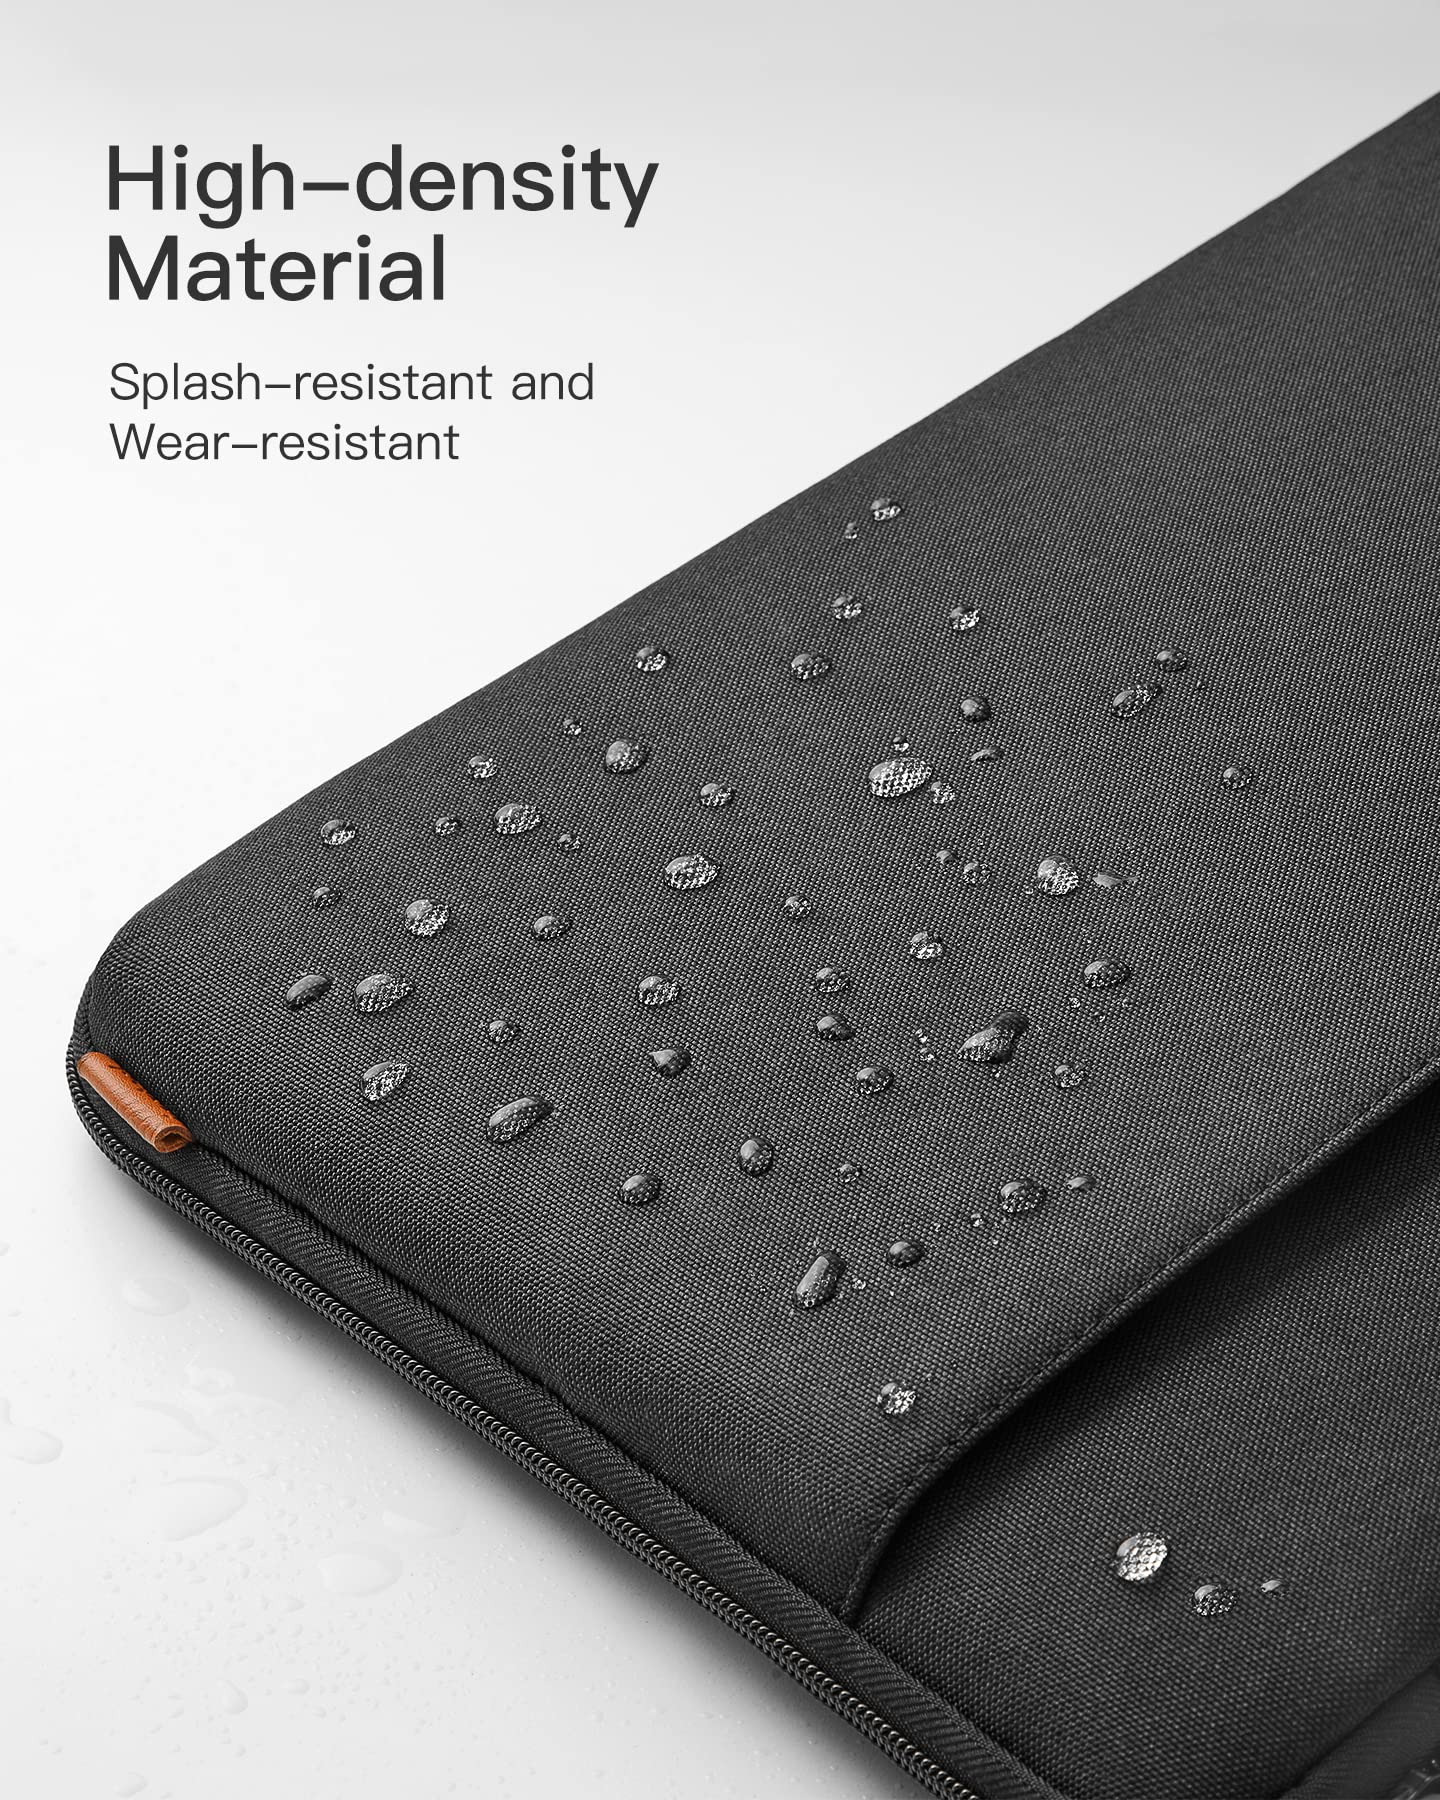 Inateck 15-15.6 Inch Shock Resistant Laptop Sleeve Case Briefcase Bag Splash-proof for Laptops, Notebooks, Ultrabooks, Netbooks - Black